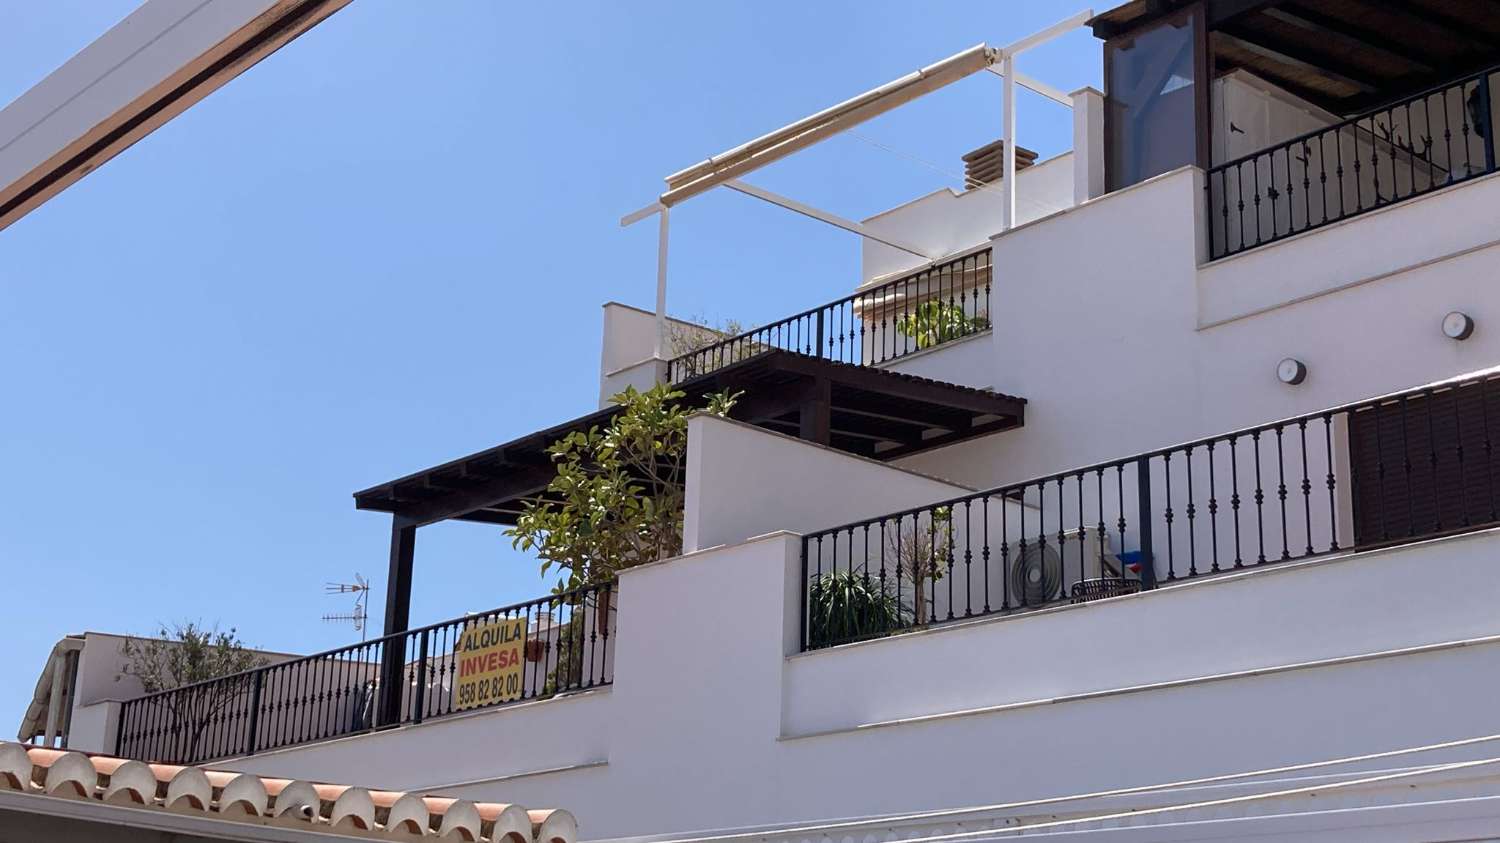 Duplex for rent in Salobreña